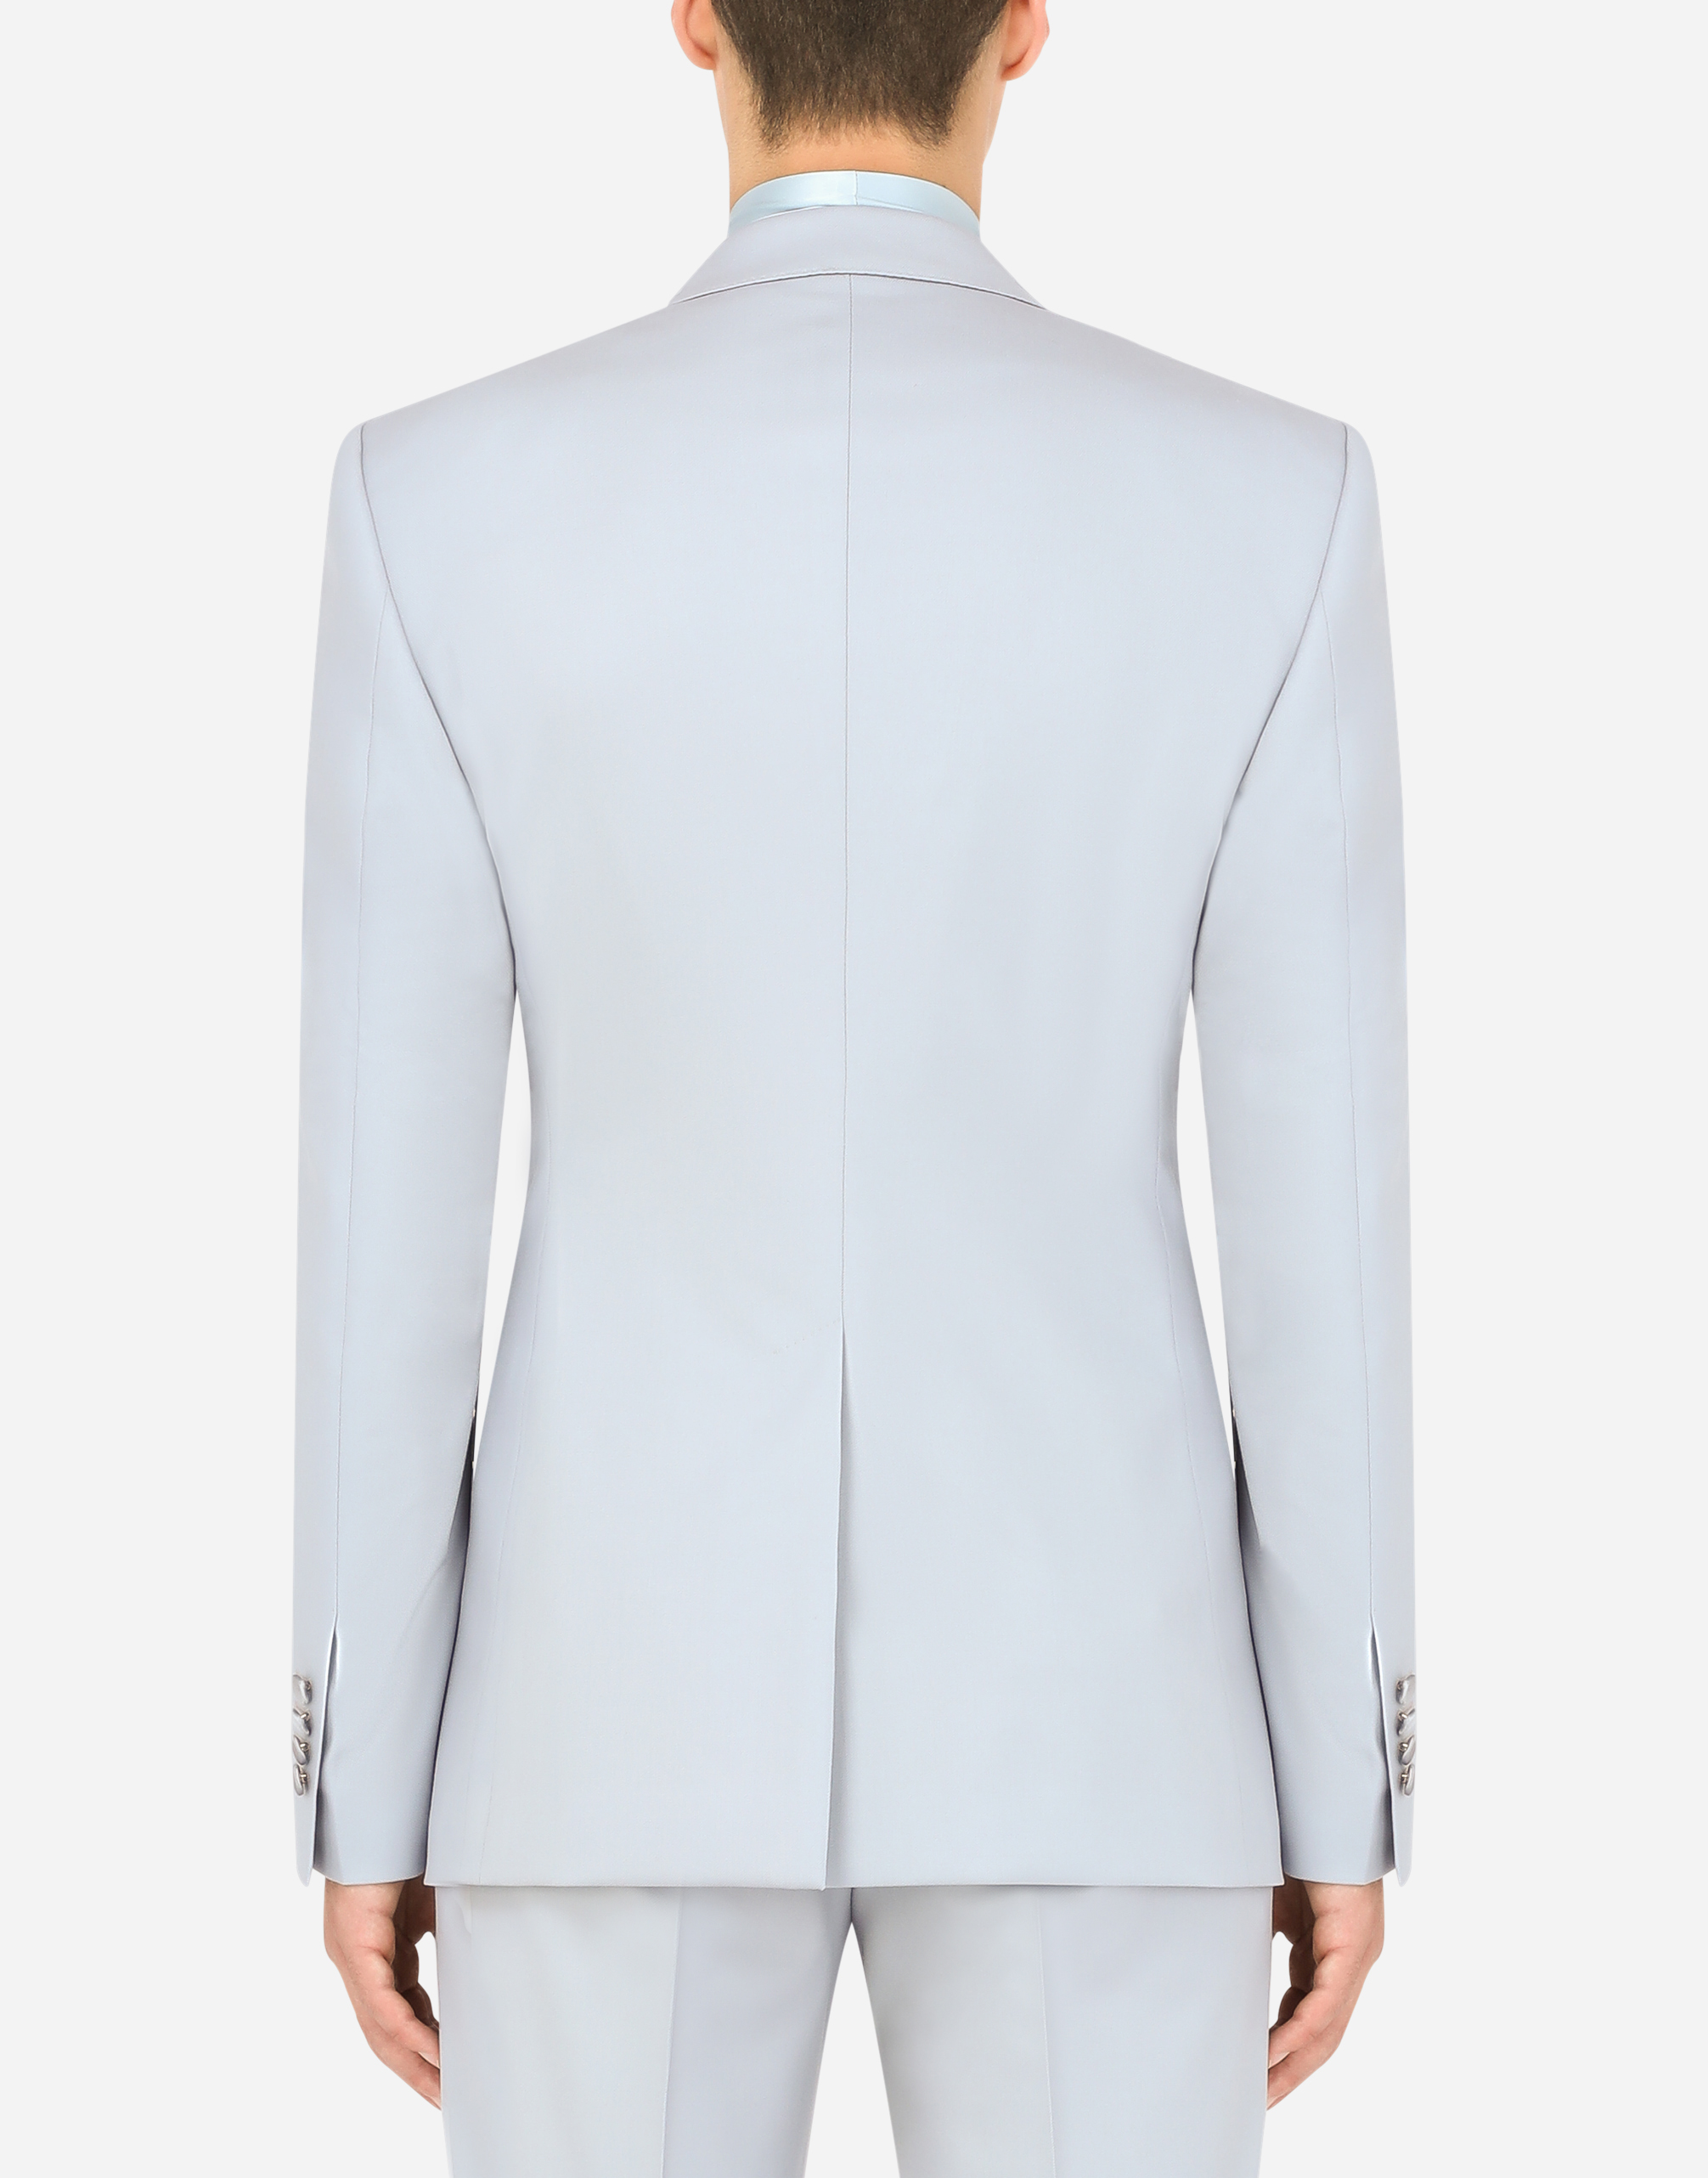 Three-piece Sicilia-fit suit in stretch wool da Uomo di Dolce & Gabbana in Blu Uomo Abbigliamento da Completi da Completi a 2 pezzi 